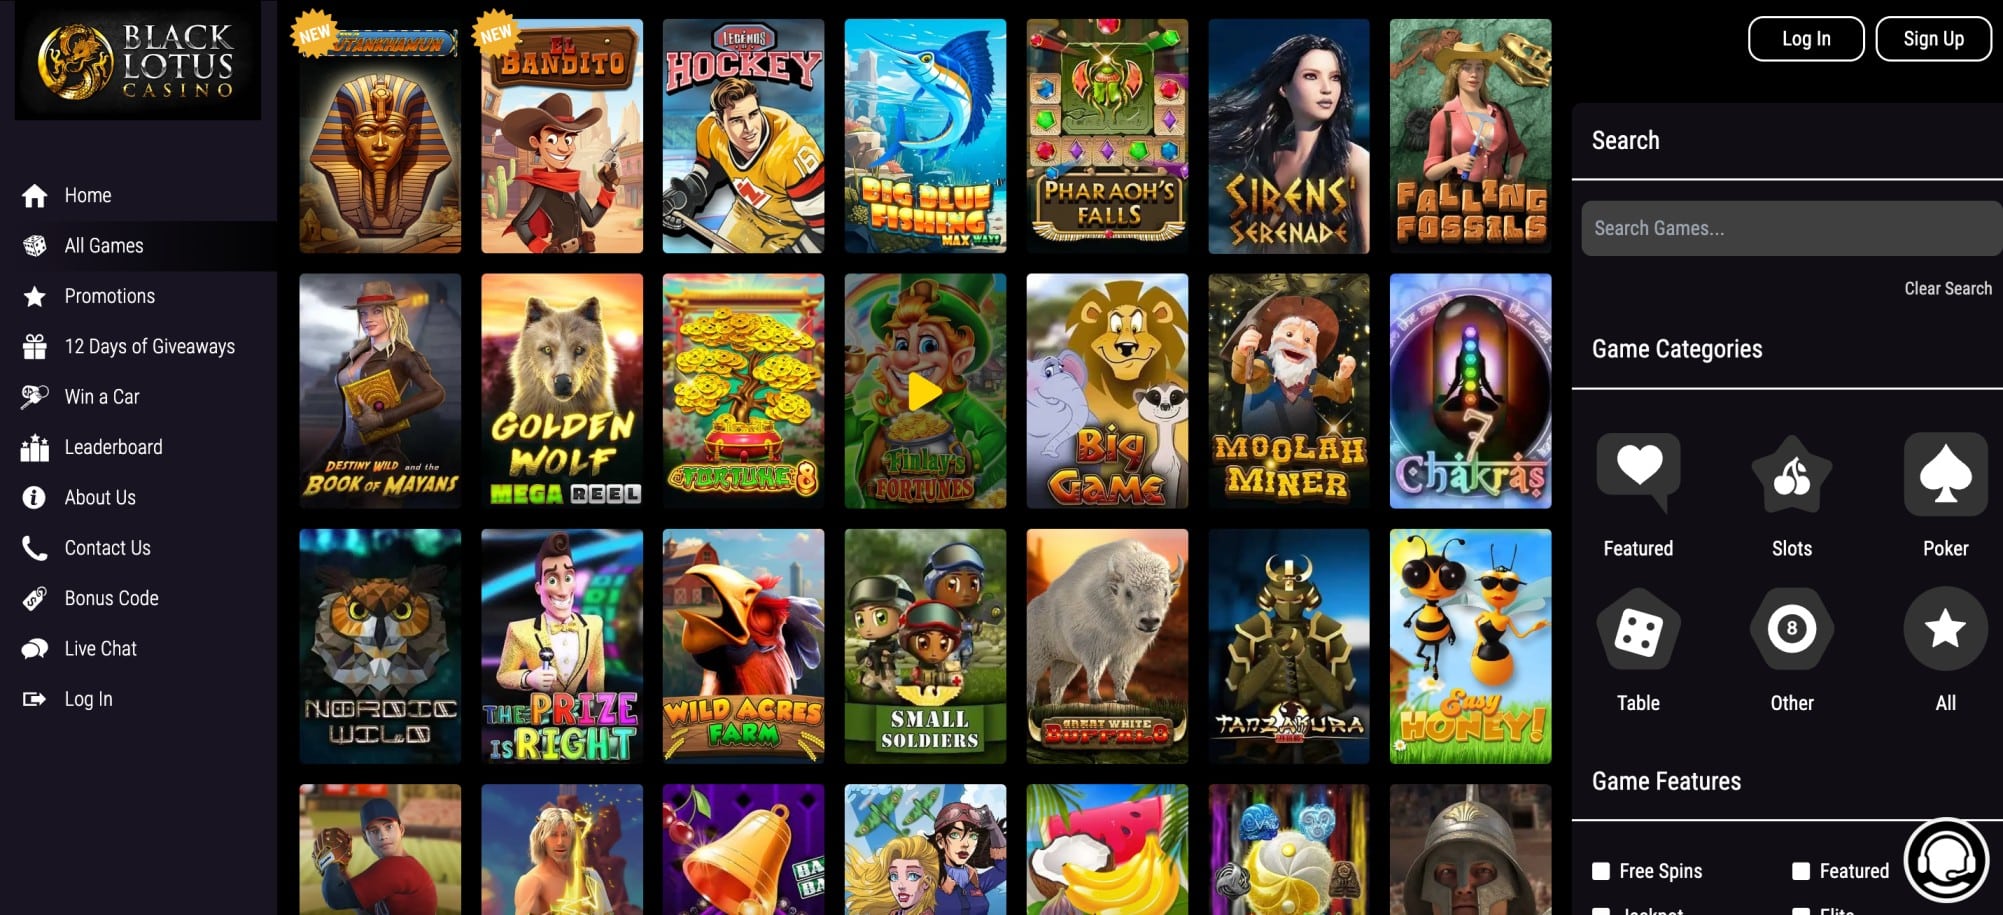 Black Lotus casino games selection